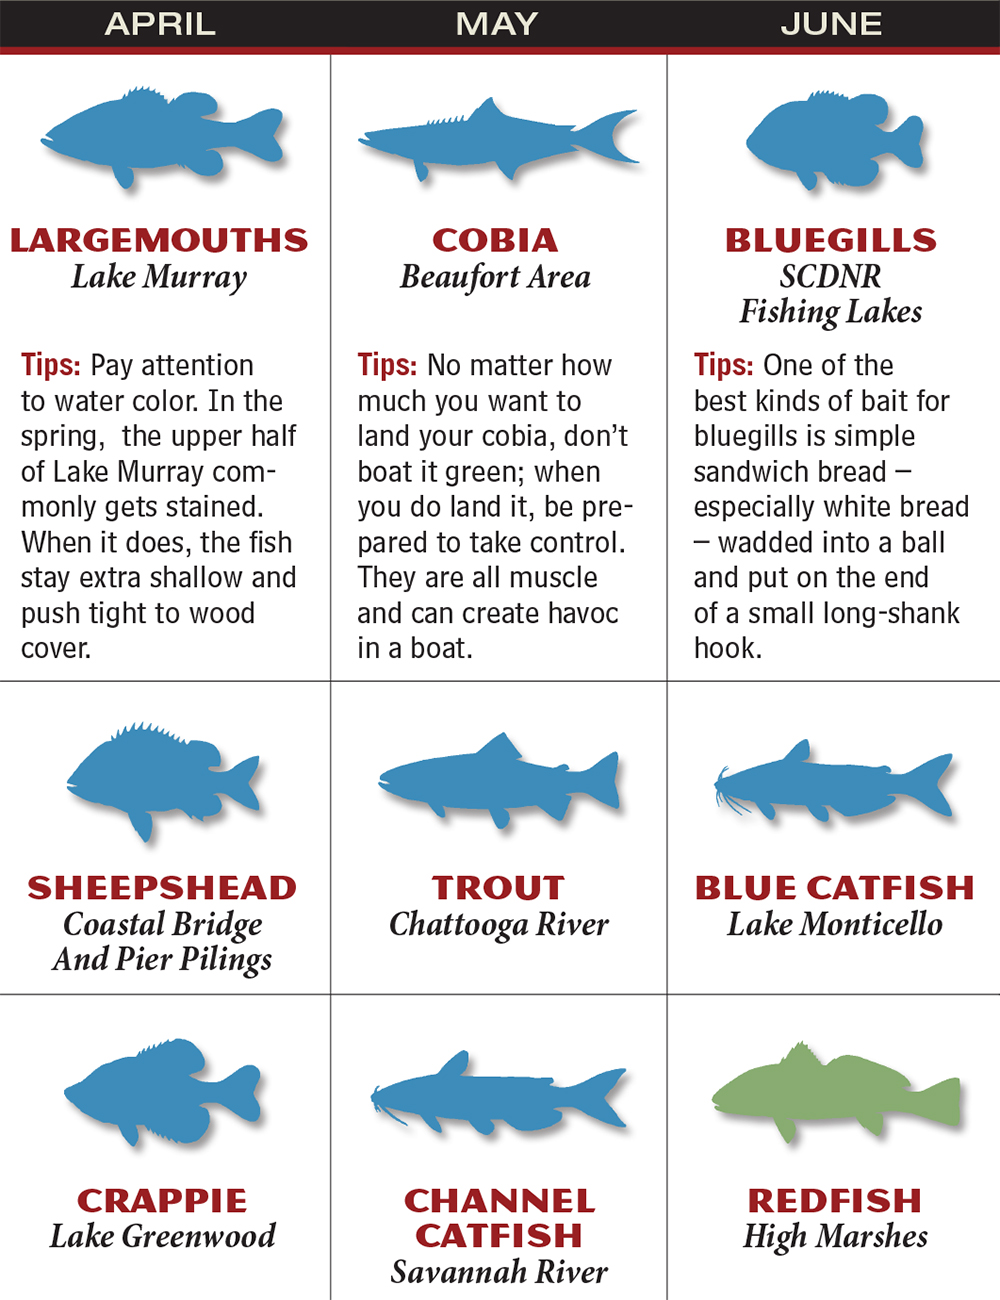 South Carolina 2016 Fishing Calendar